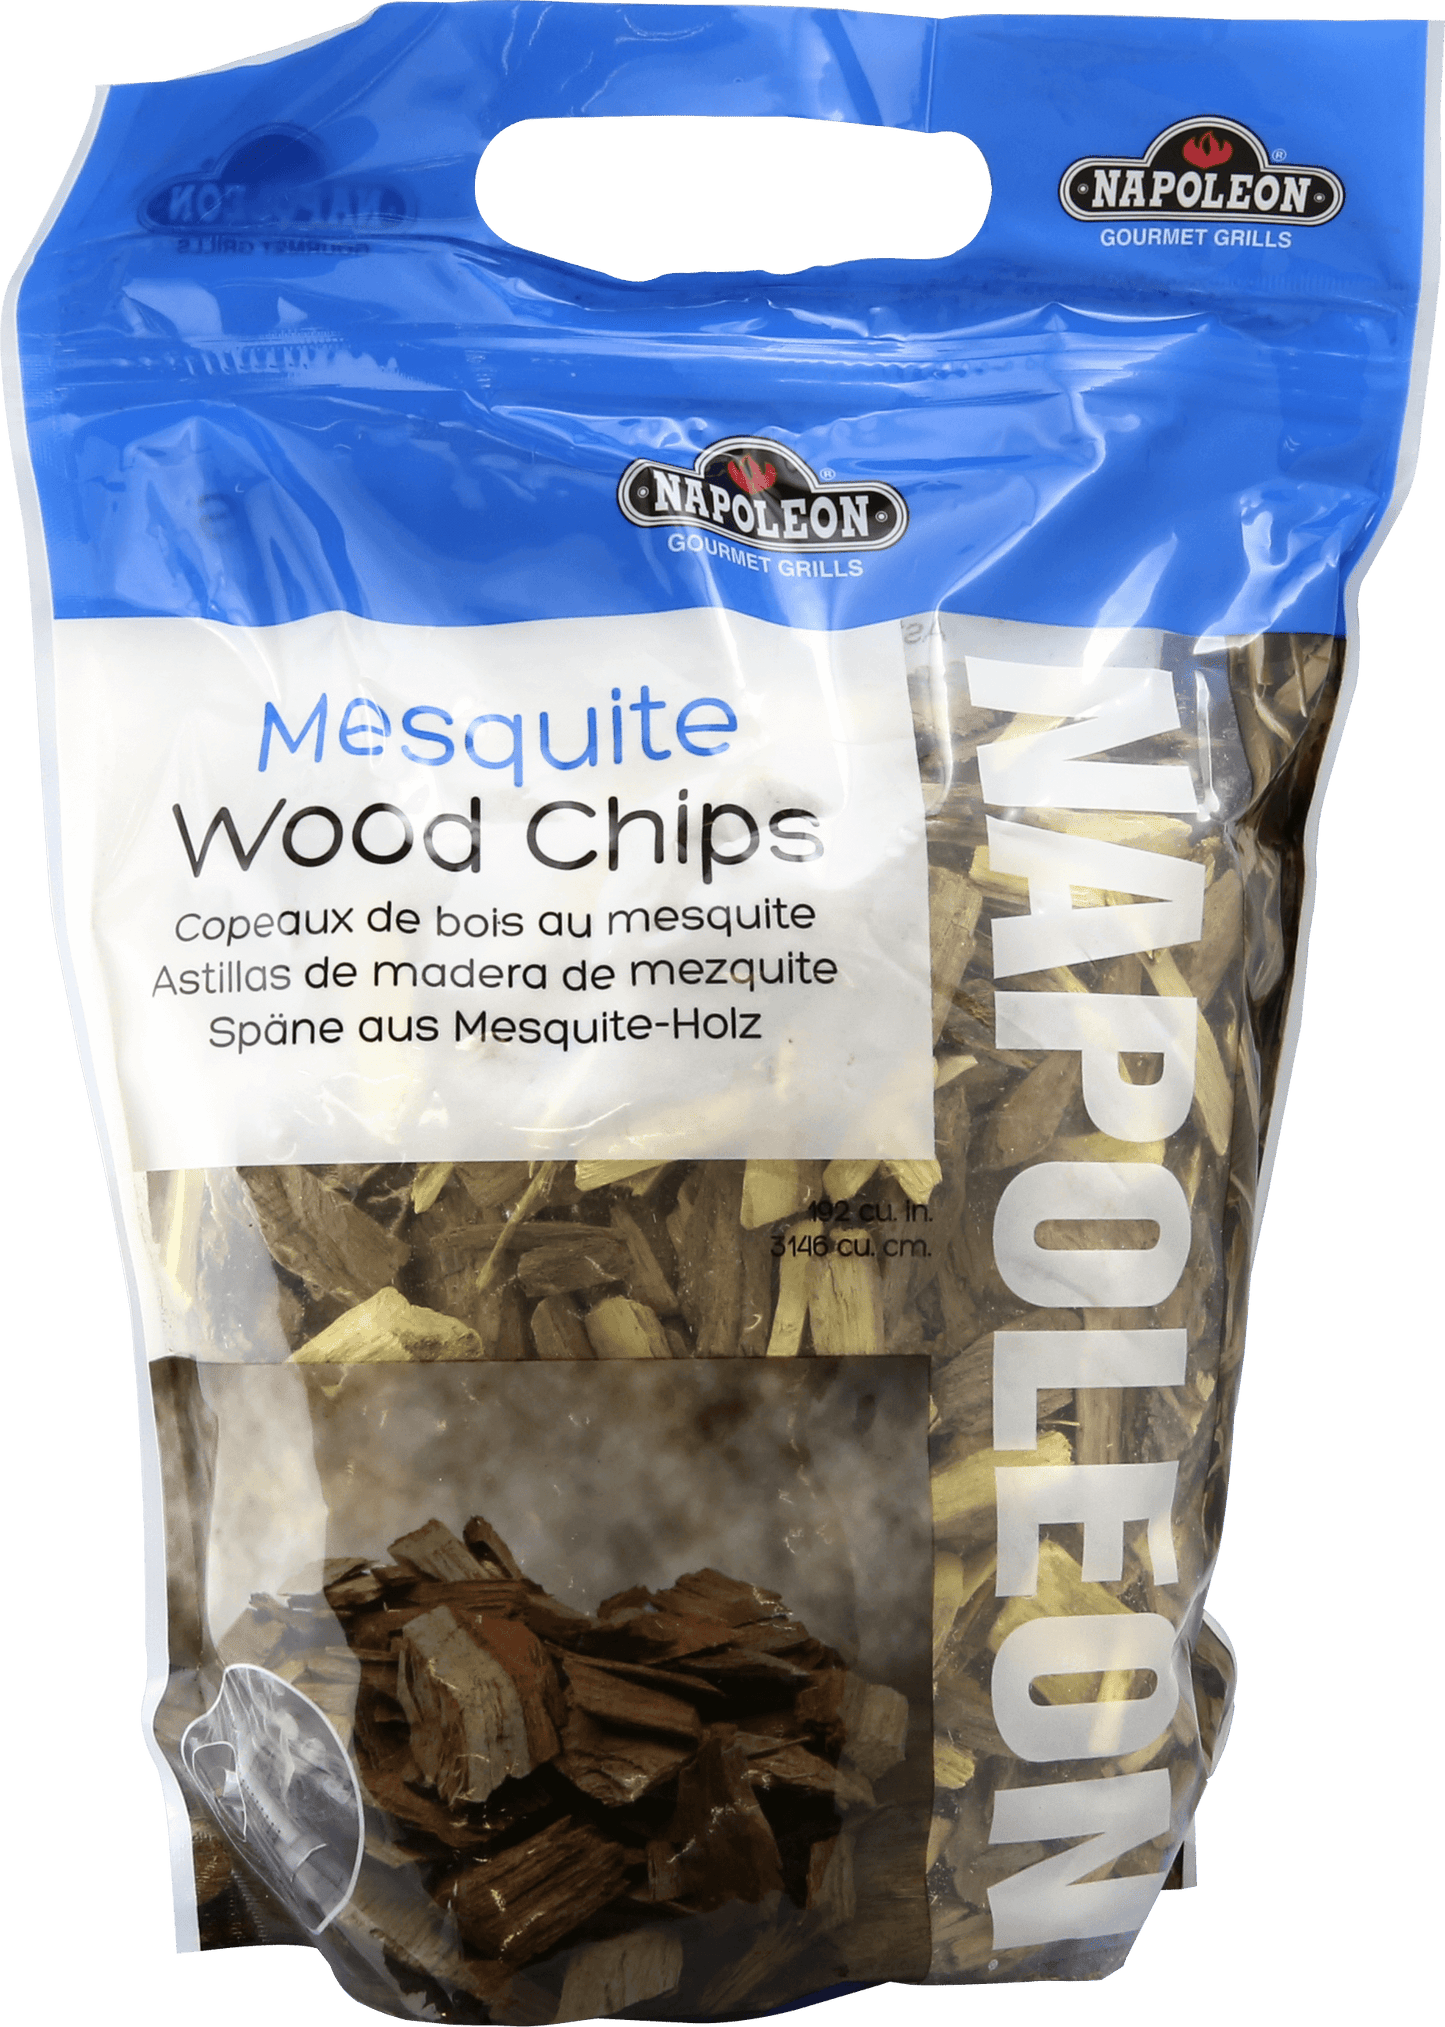 Napoleon 2lb. Mesquite Wood Chips